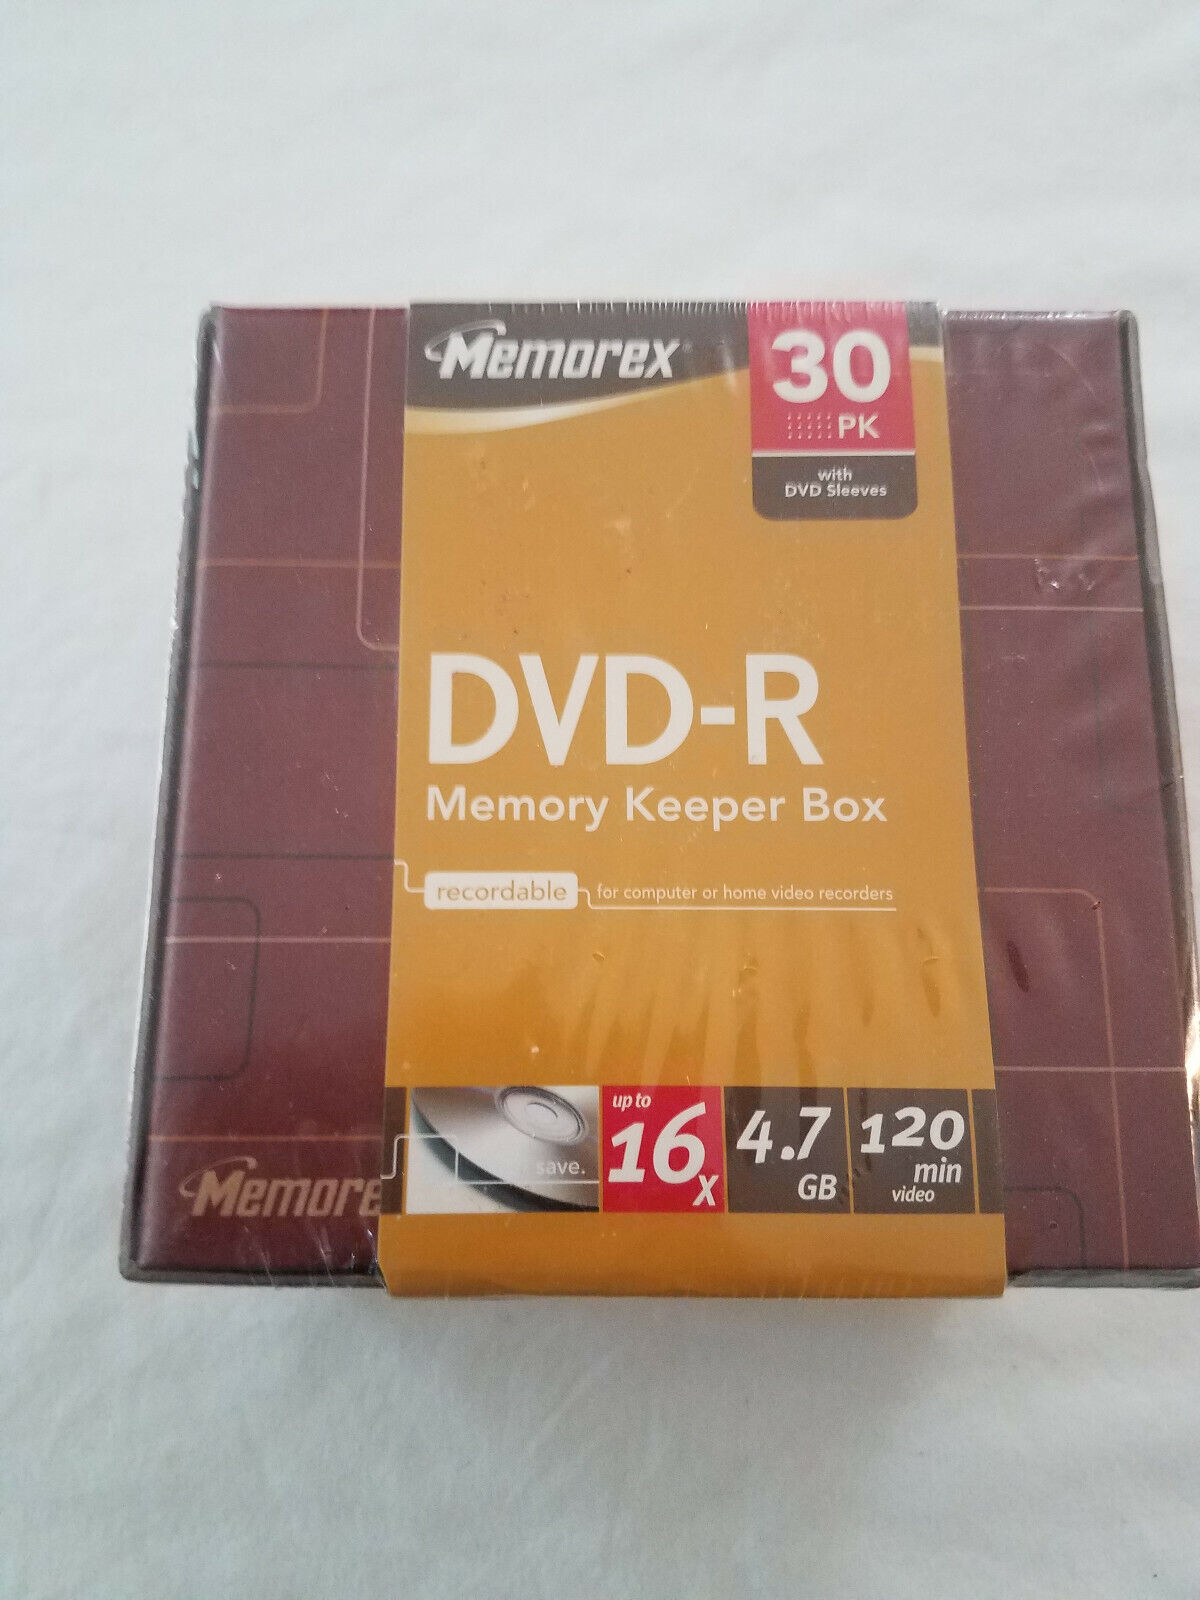 Memorex DVD-R 16X 4.7GB in Memory Keeper Box w/Sleeves - 30Pk 